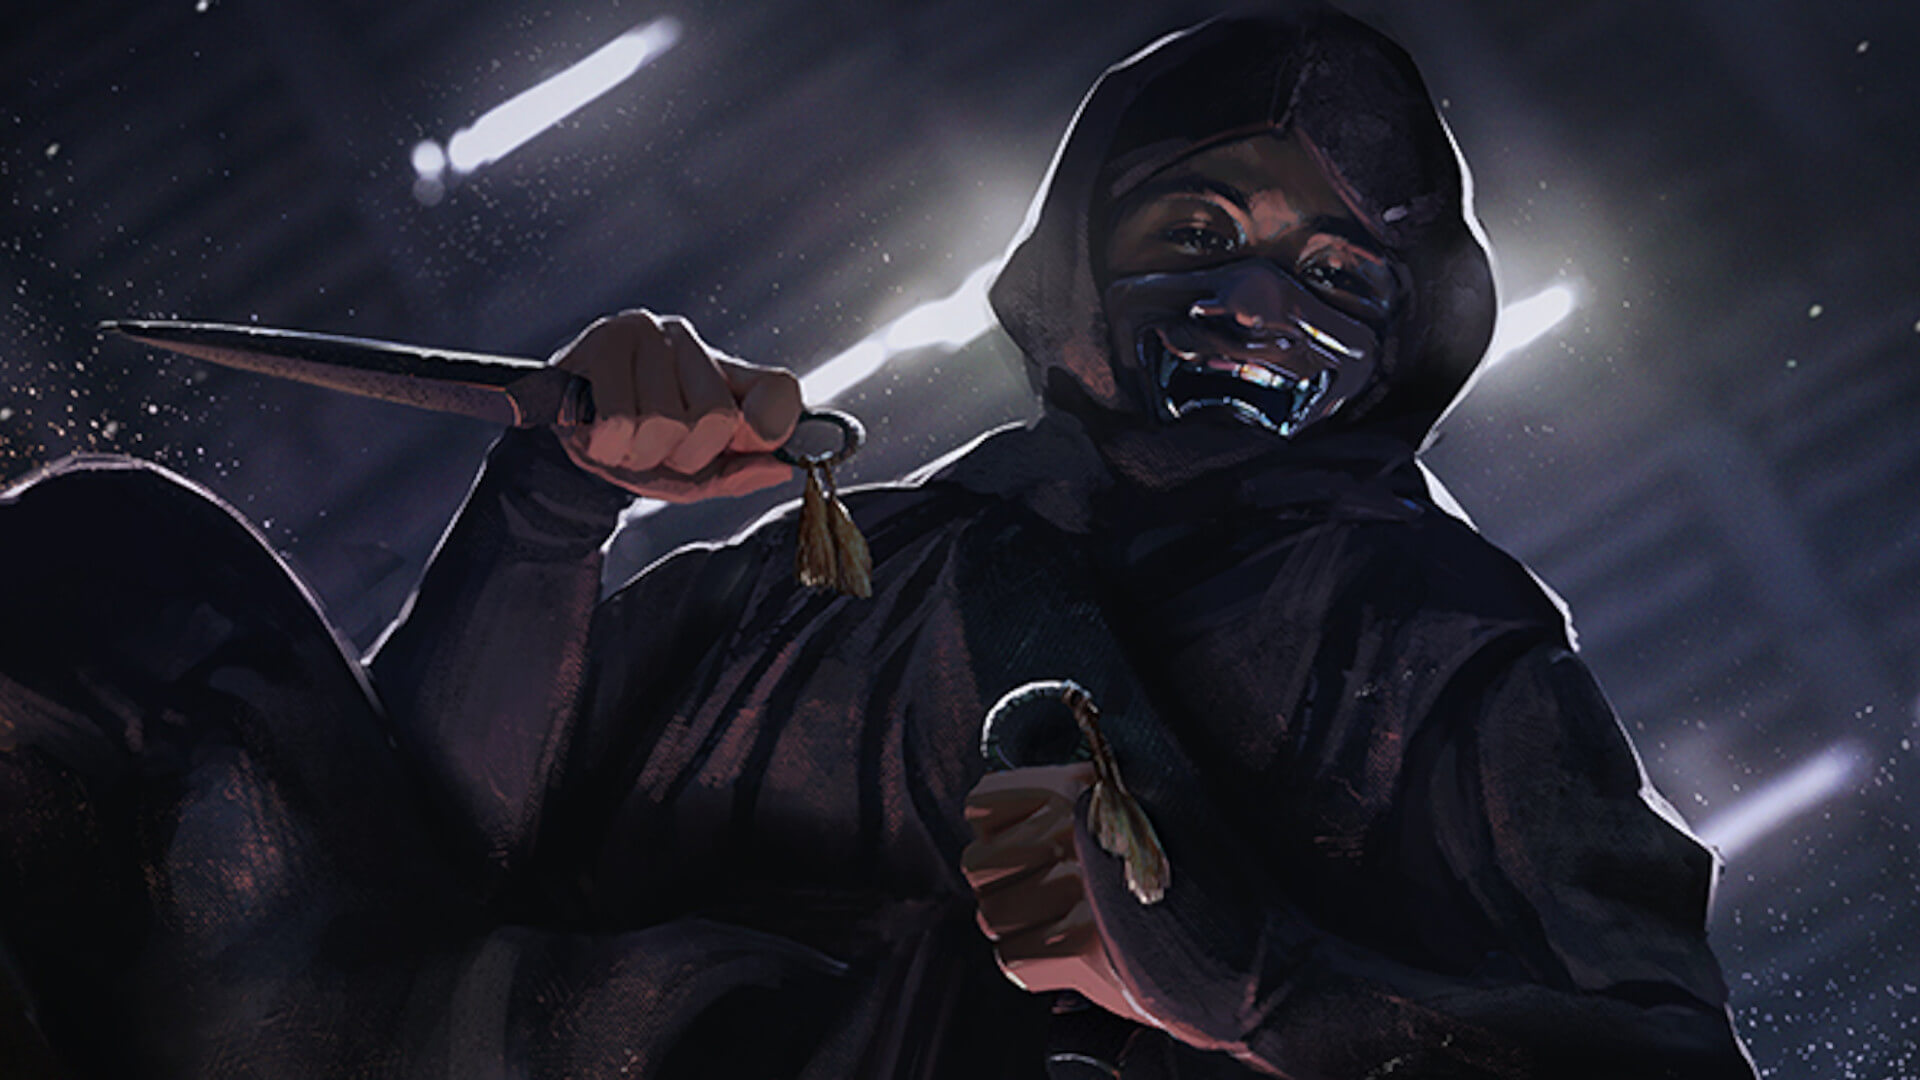 A ninja in the new Dark Passenger project